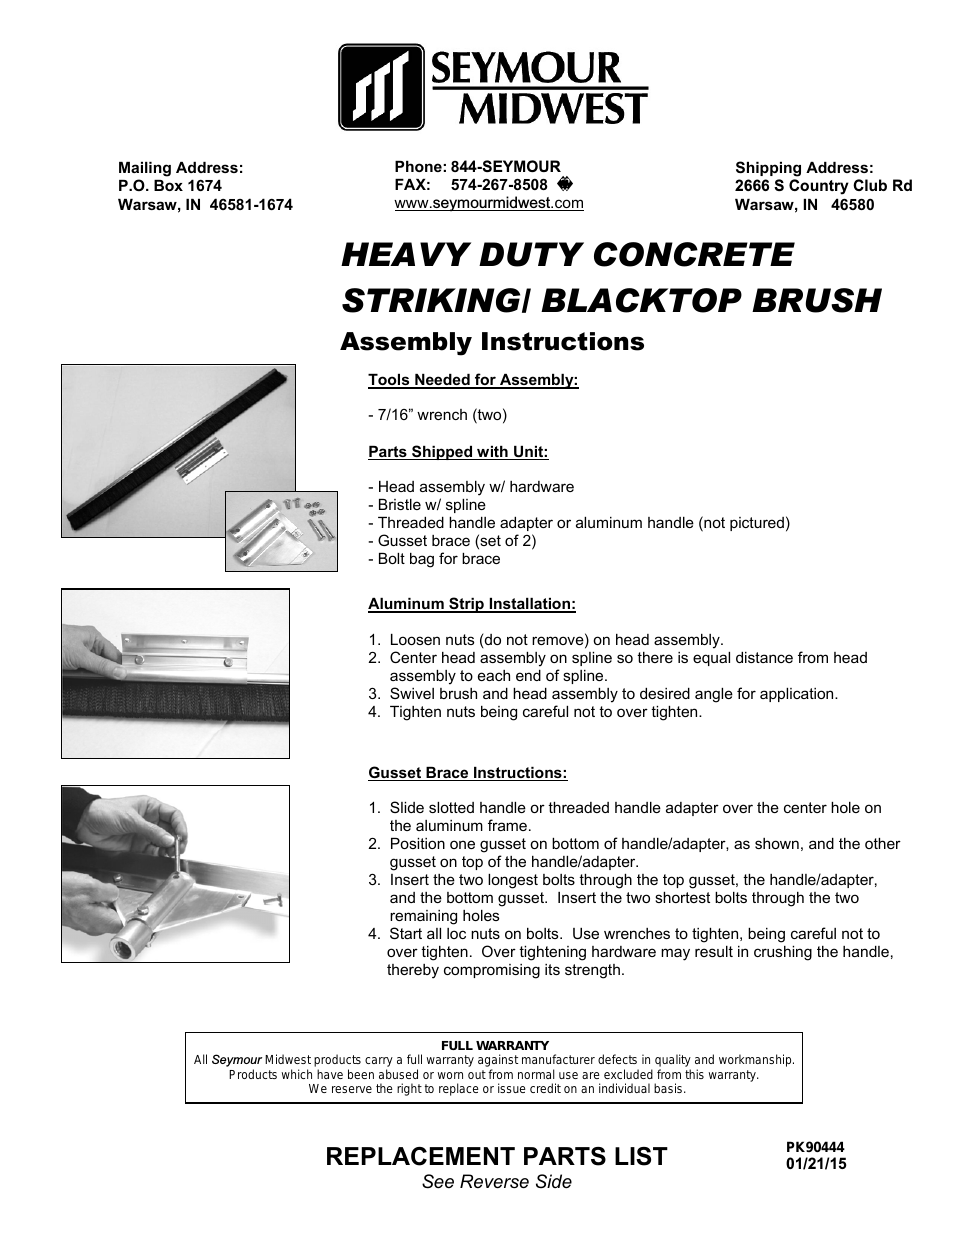 Heavy-Duty Concrete & Blacktop Brush(PK90133)